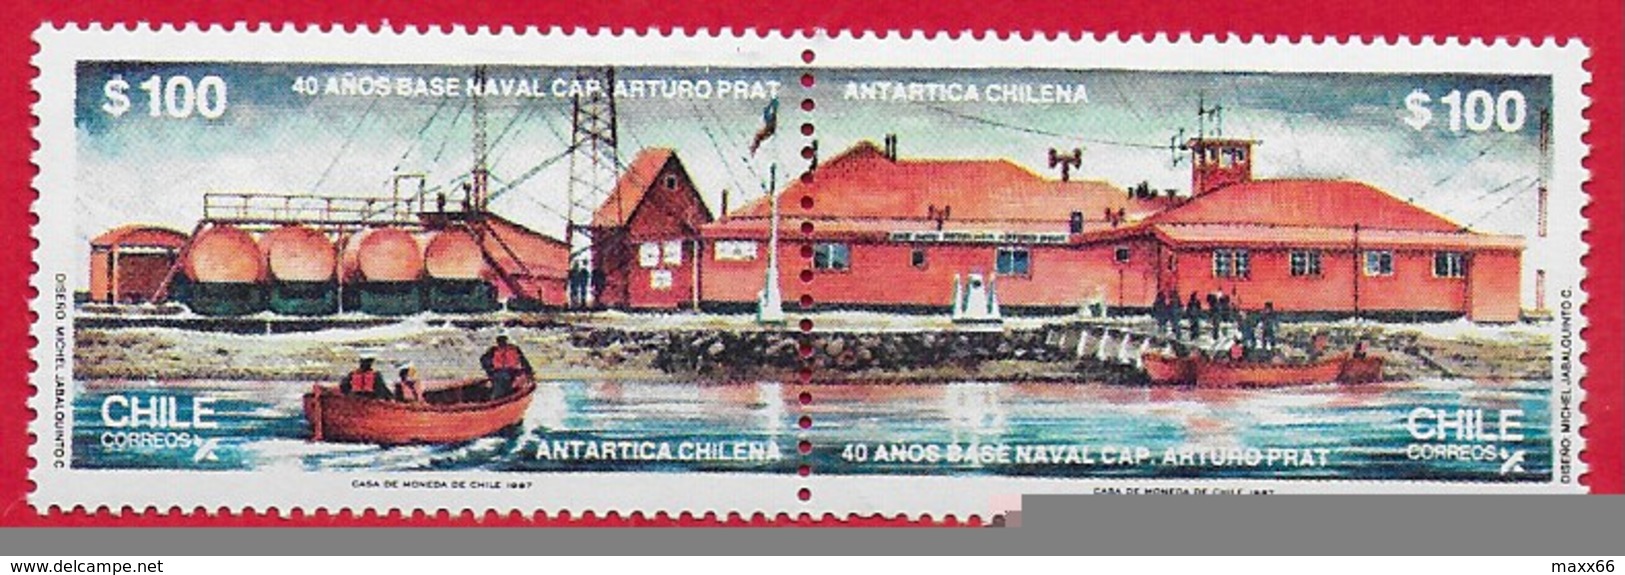 CILE CHILE MNH - 1987 40th Anniversary Of Captain Arturo Prat Antarctic Naval Base - 2 X 100 $ - Michel CL 1171-1172 - Cile